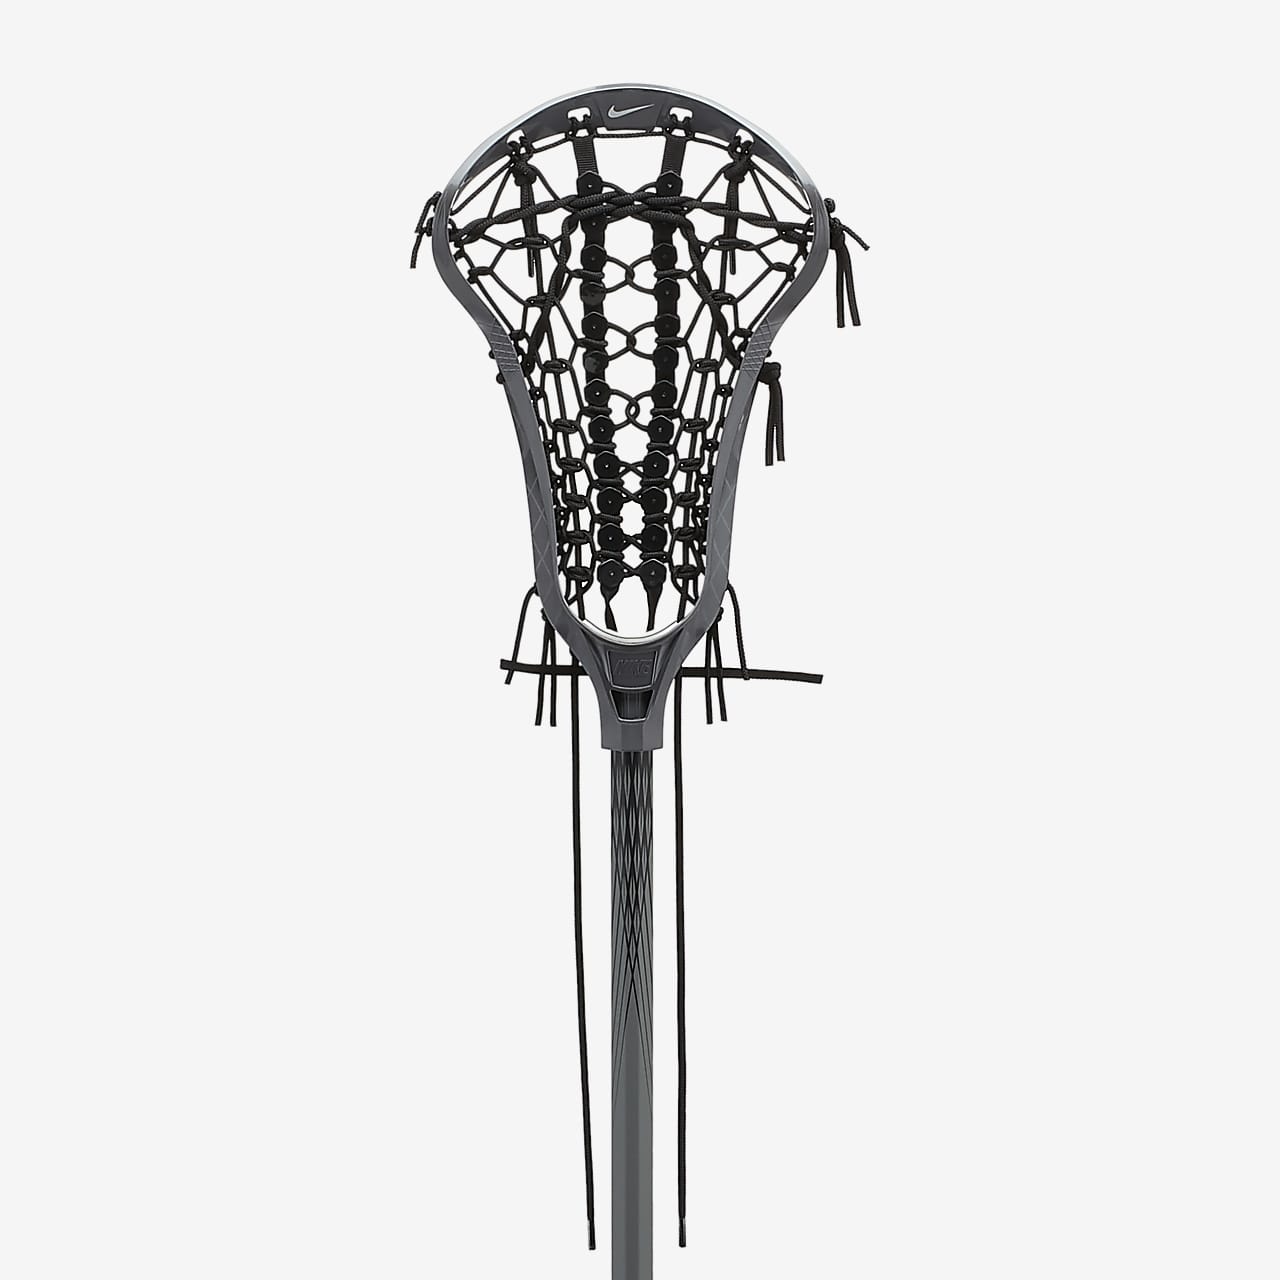 nike lunar 2 lacrosse stick review